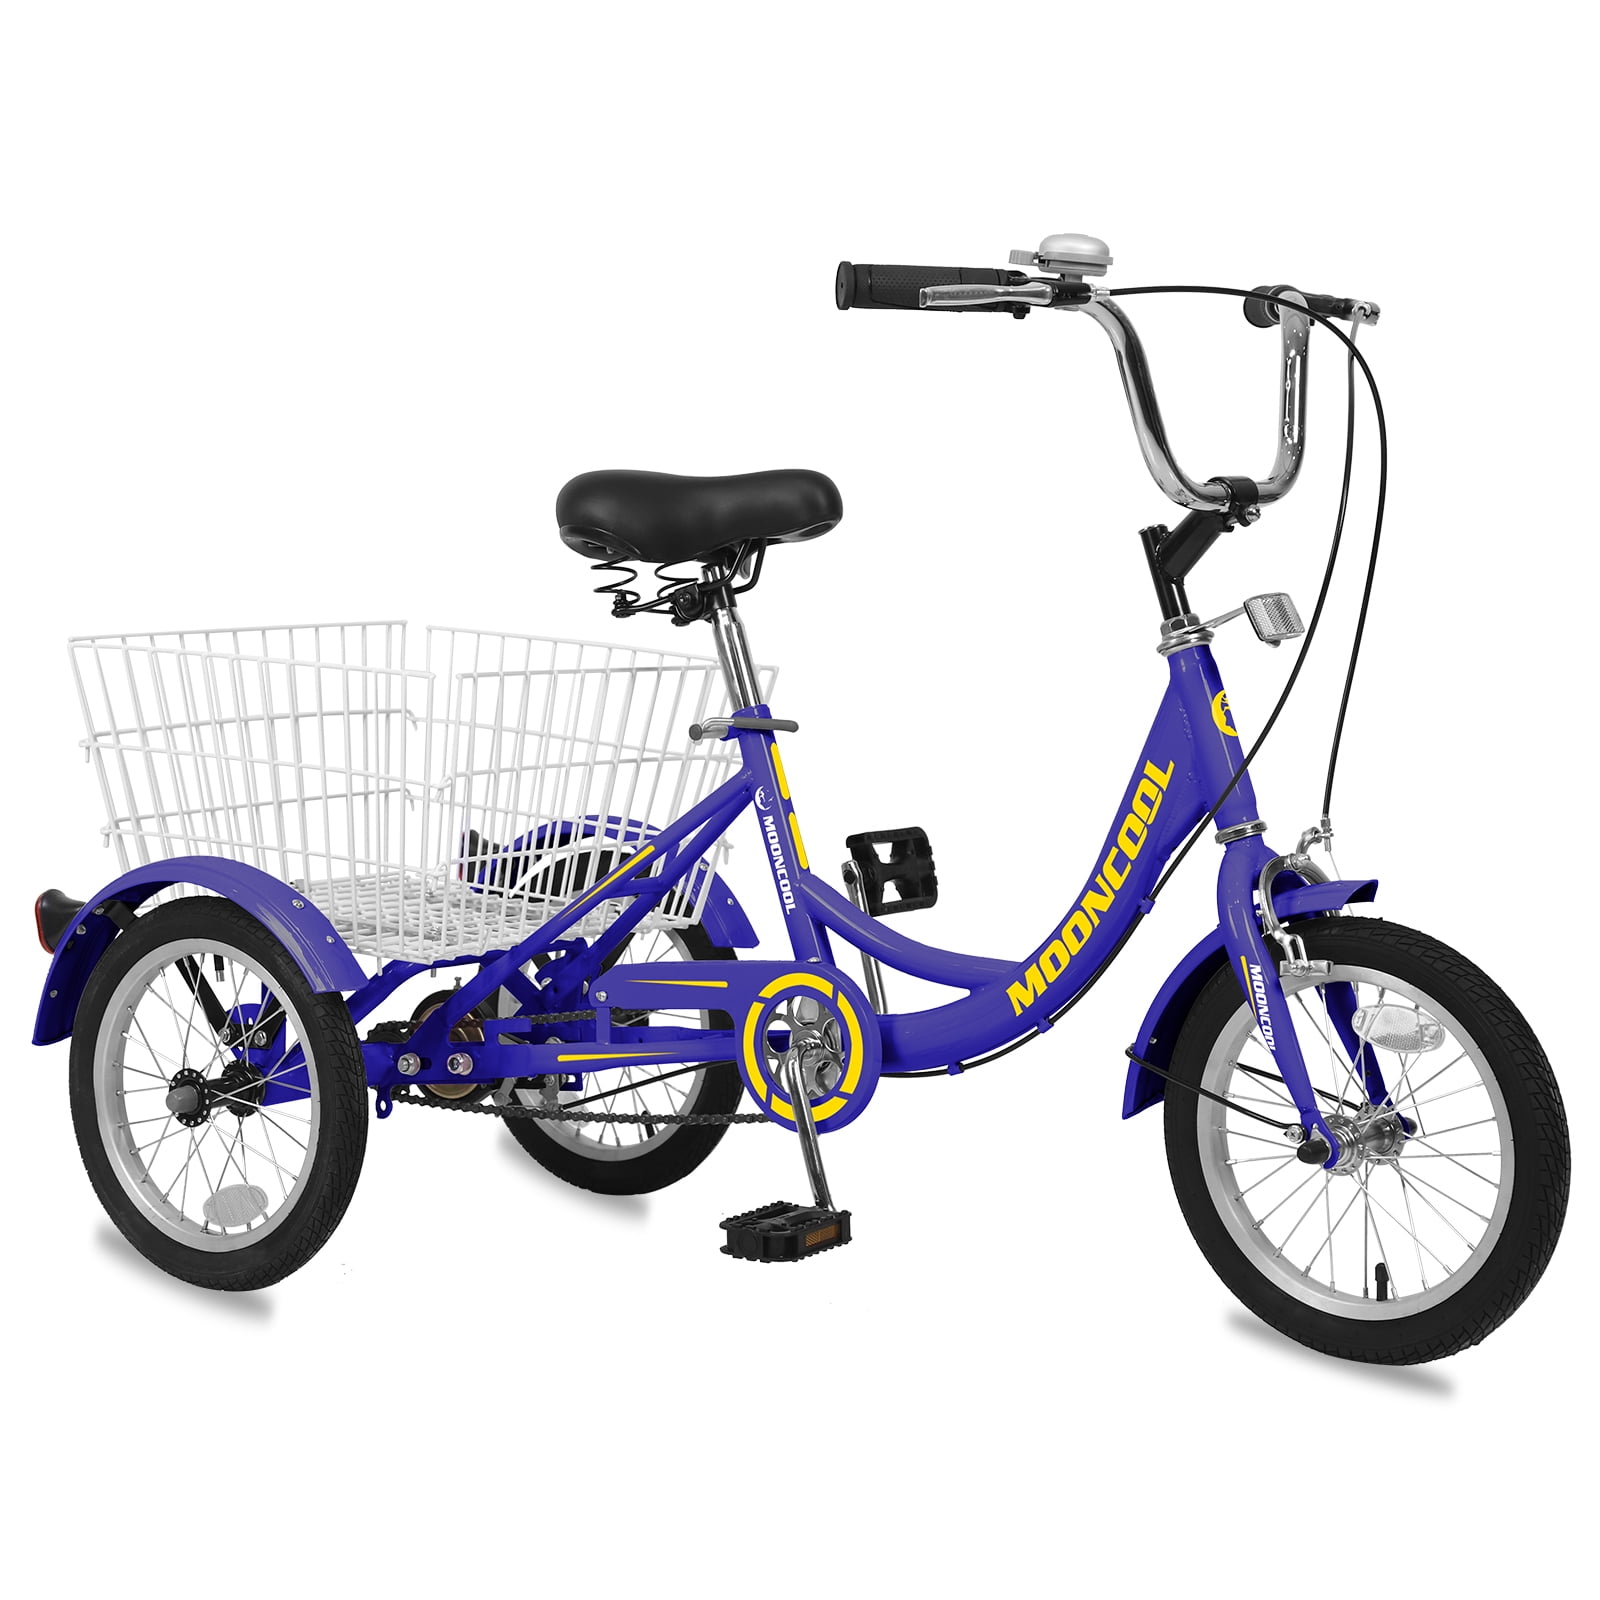 16in Kids Trike Three Wheel Balance Bike Tricycle Cruiser Bicycle Cyan w/Basket 